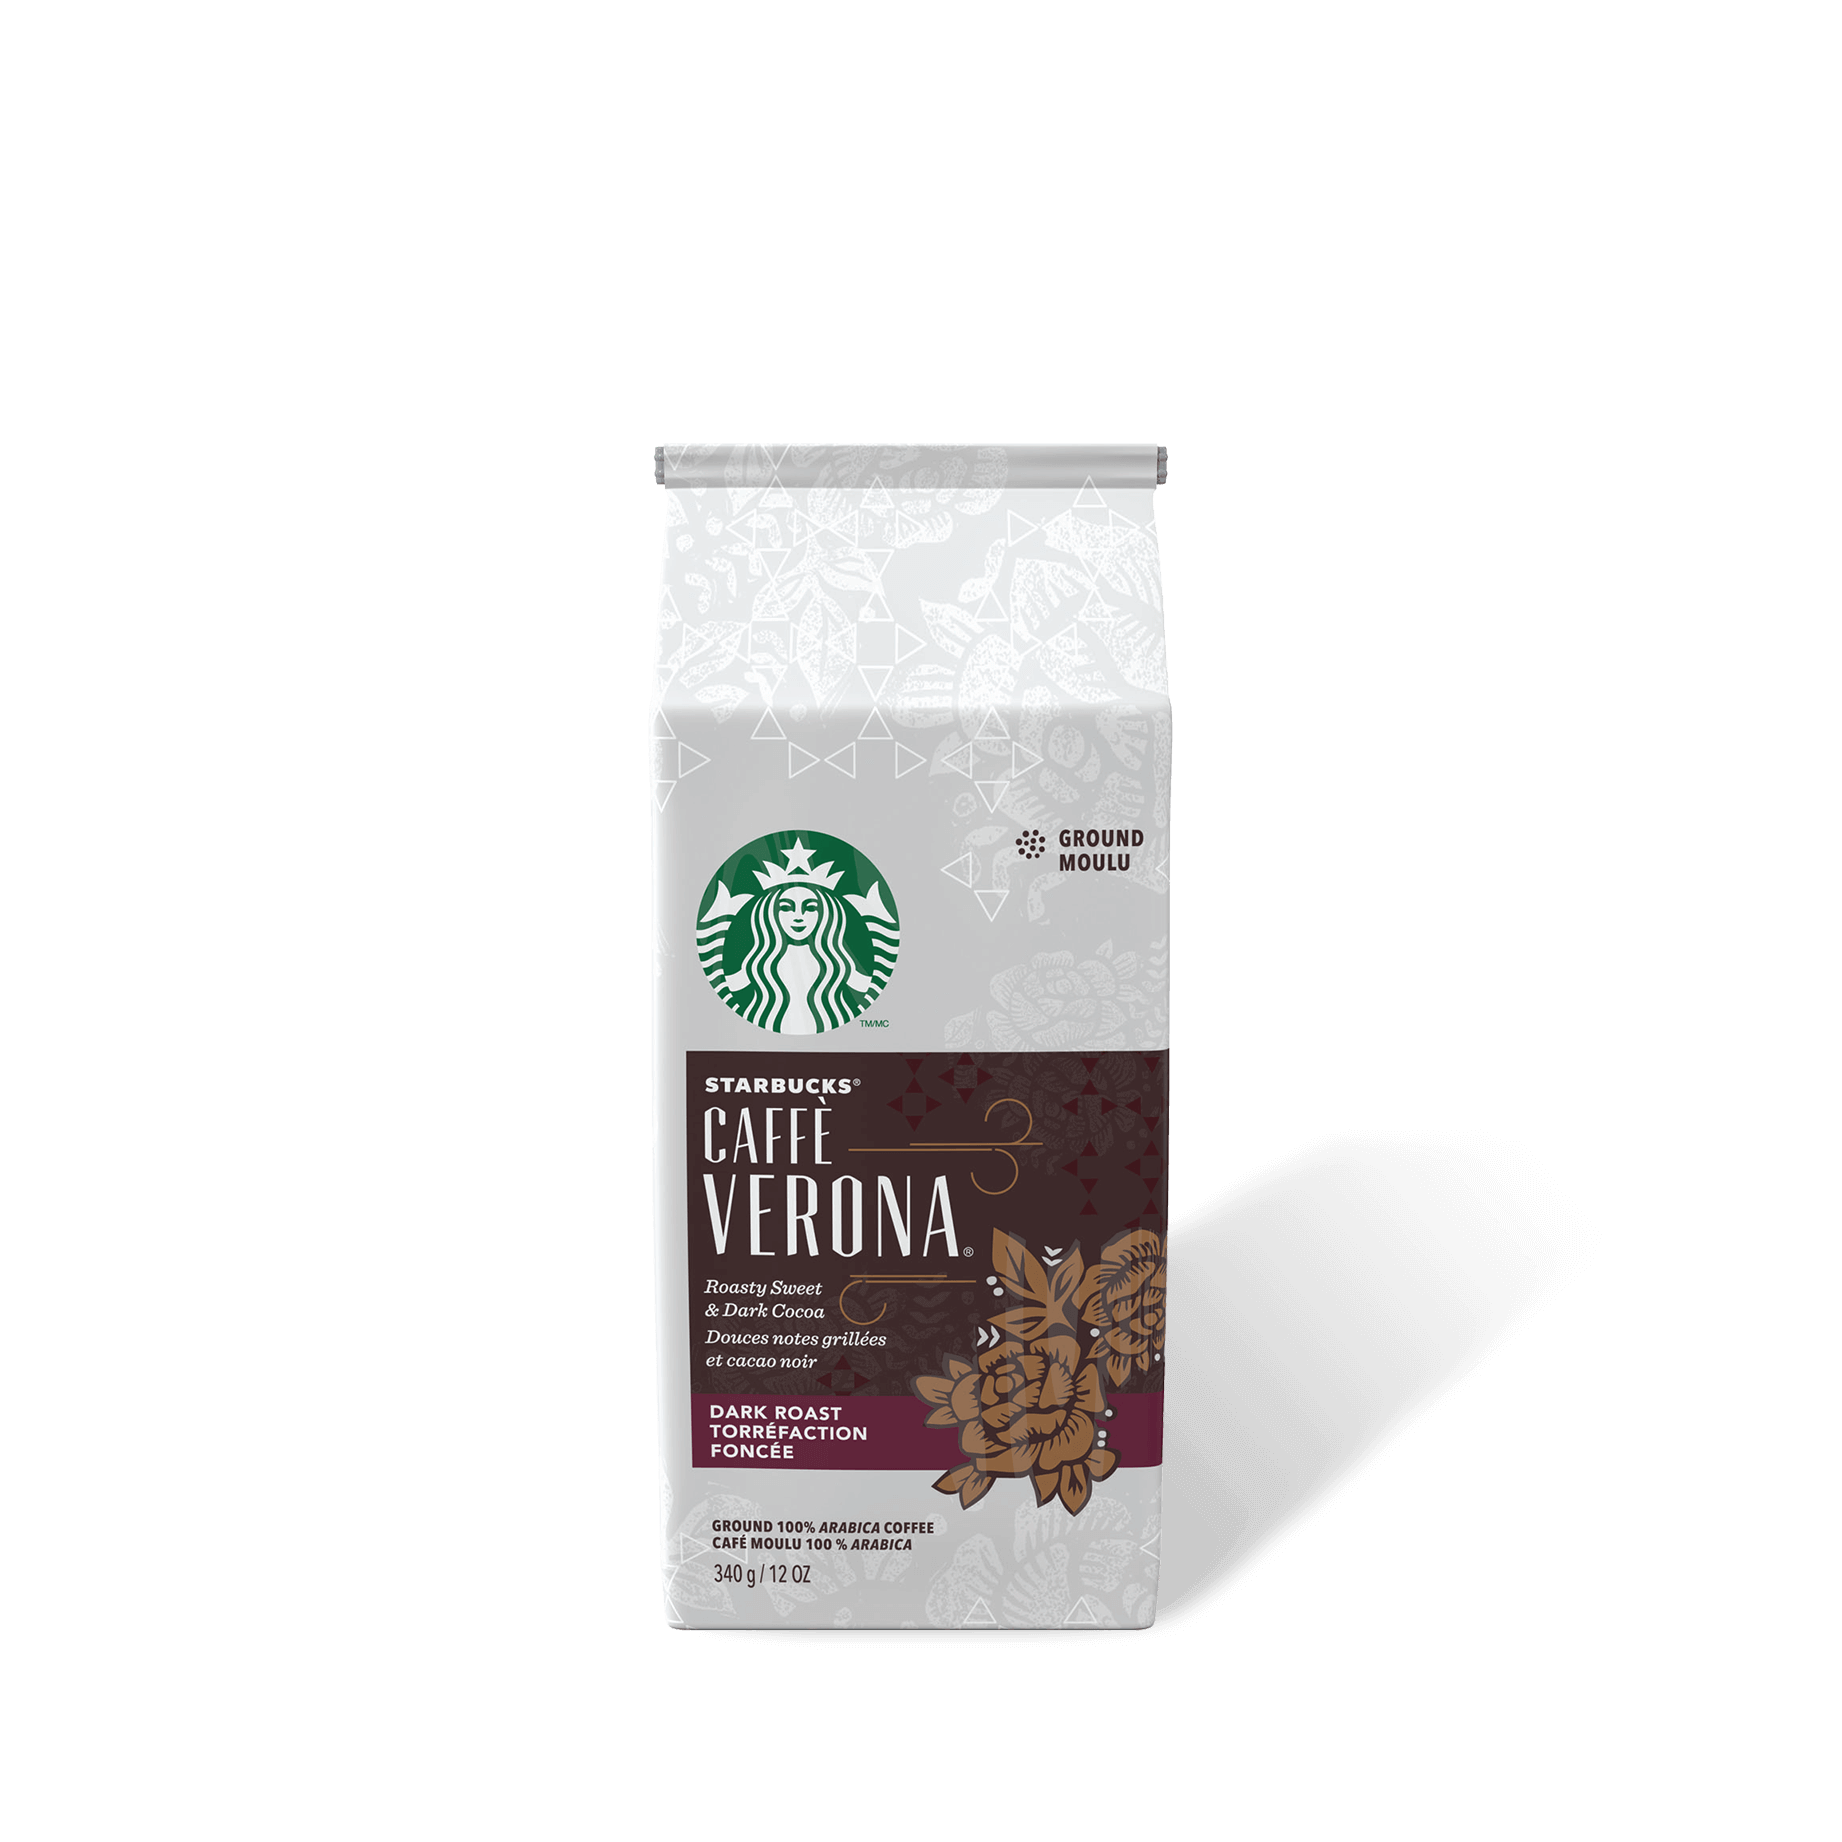 Starbucks-Caffe Verona, Roasty Sweet & Dark Cocoa 340g